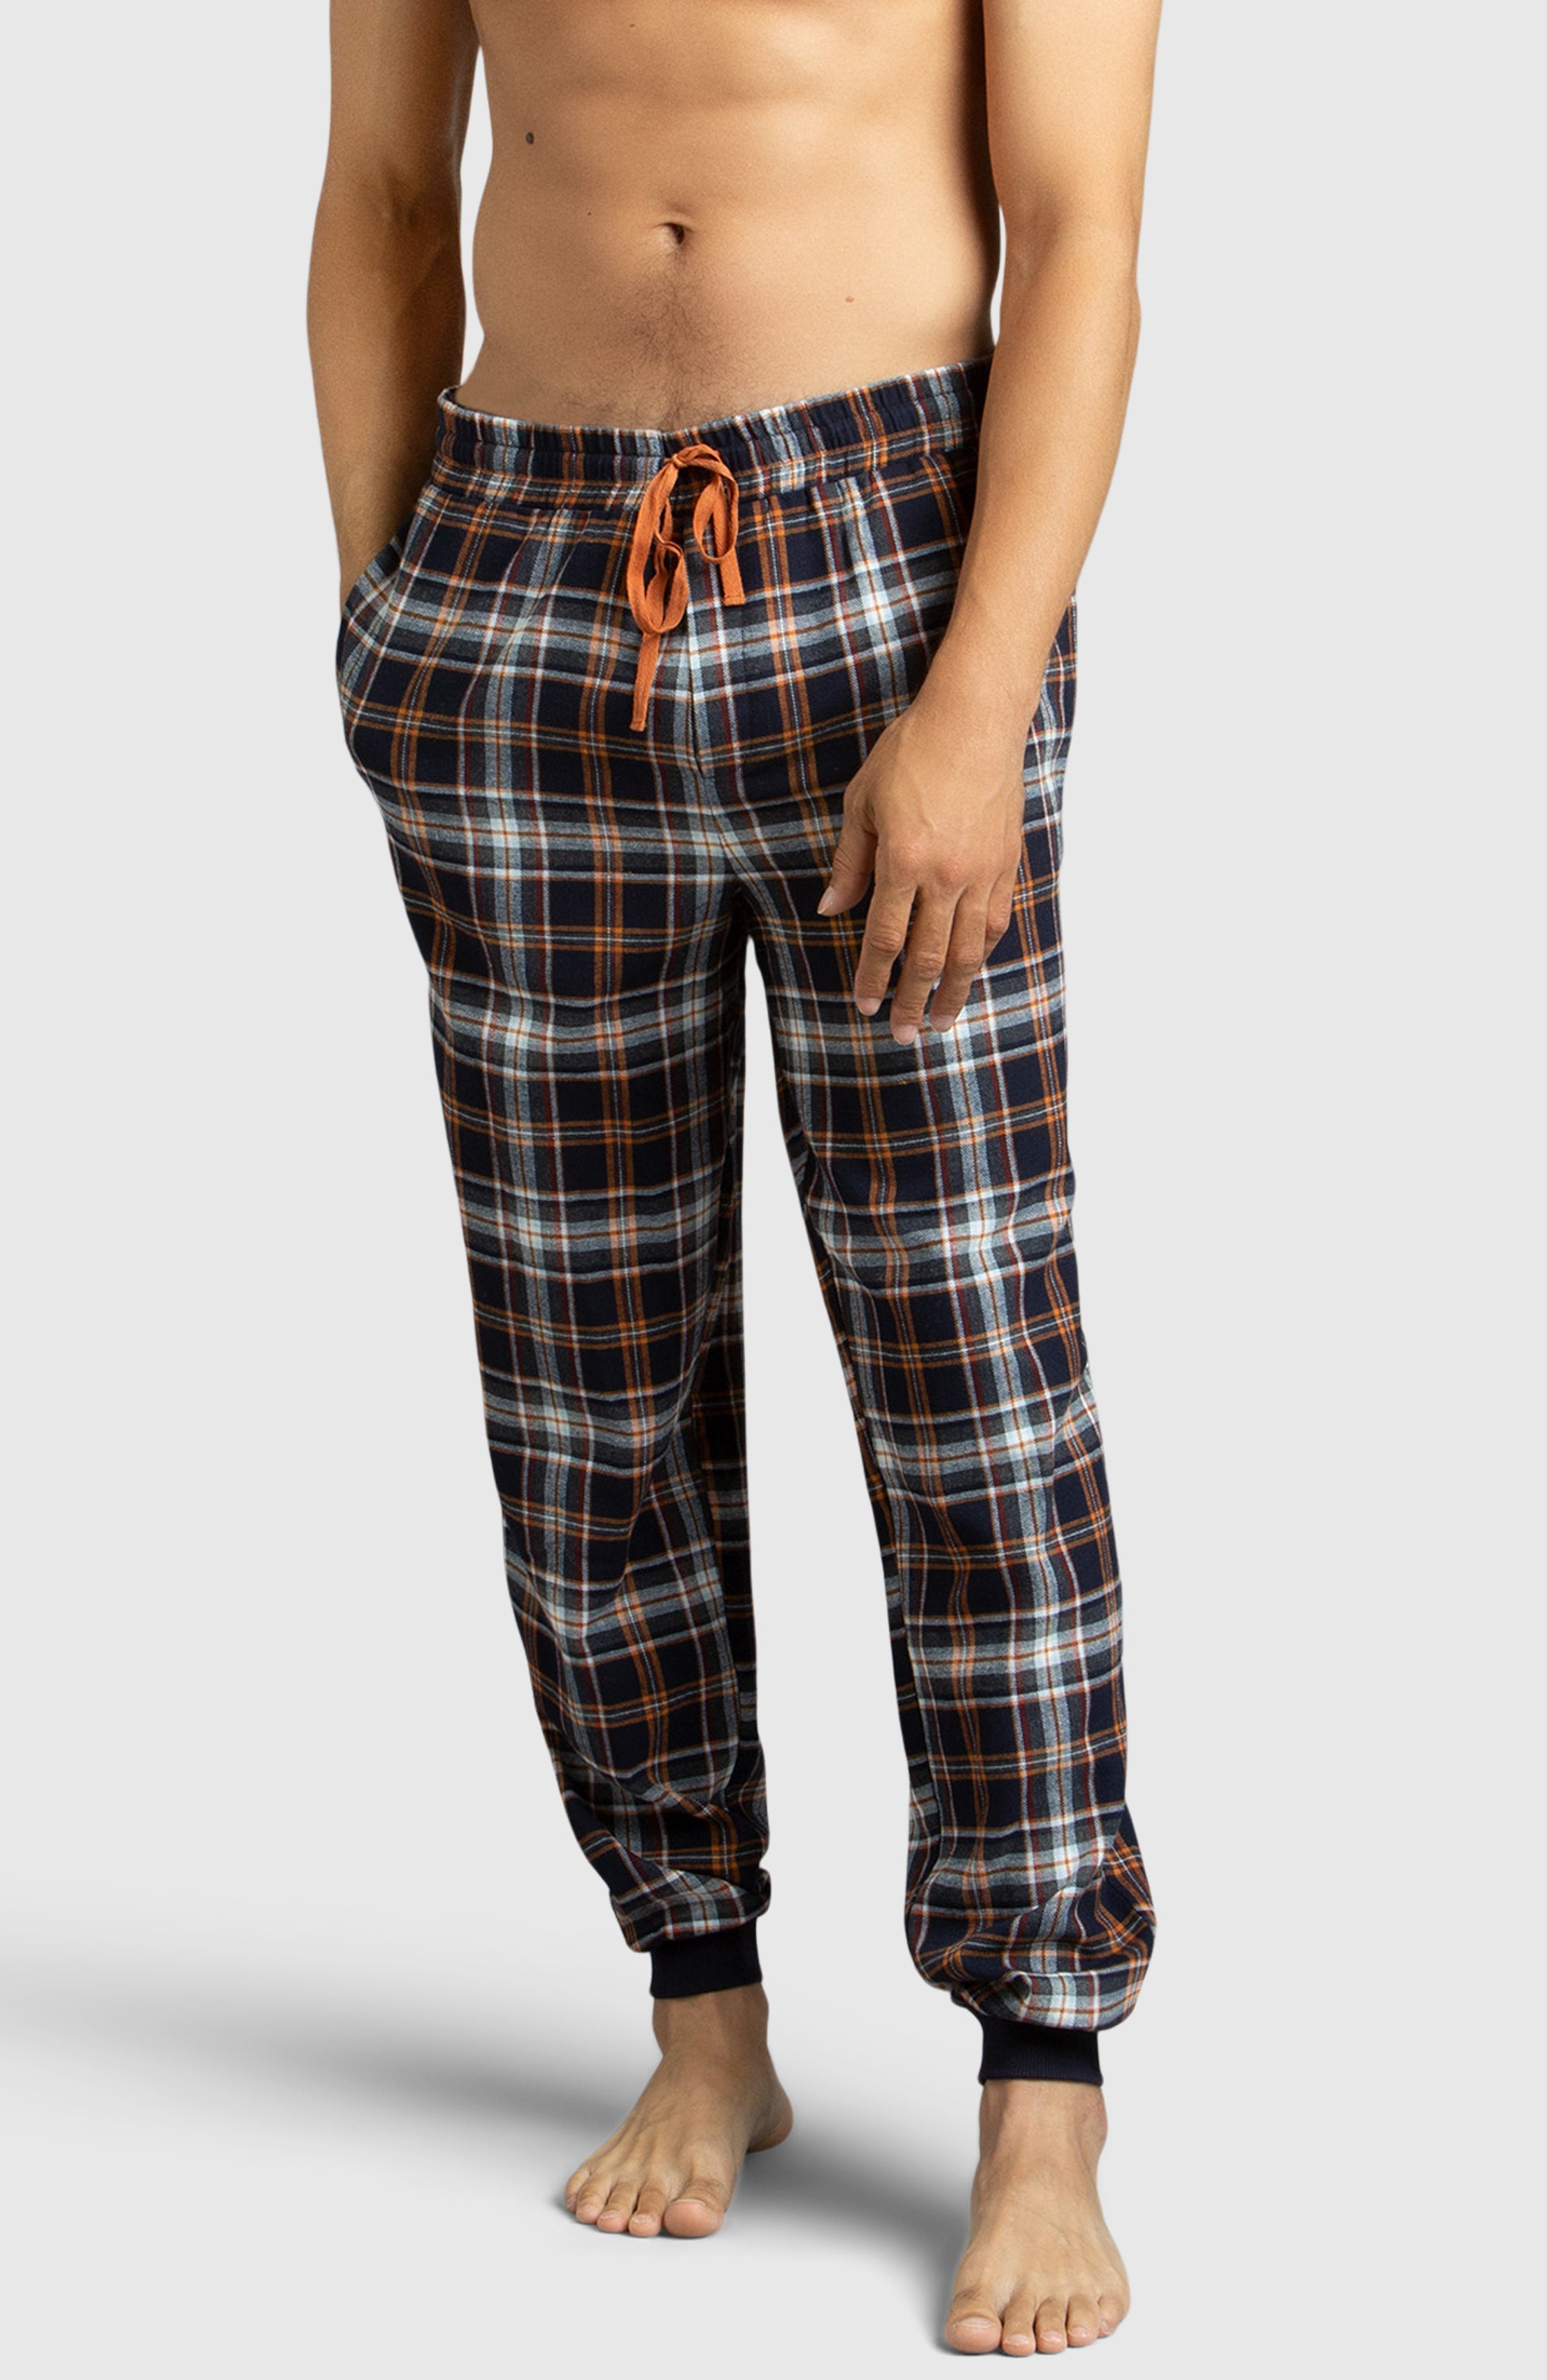 Essential Elements 3 Pack: Mens Cotton Sleep Pants - 100% Cotton Jersey  Lounge Casual Sleep Bottoms PJ Pajama Pants - Walmart.com